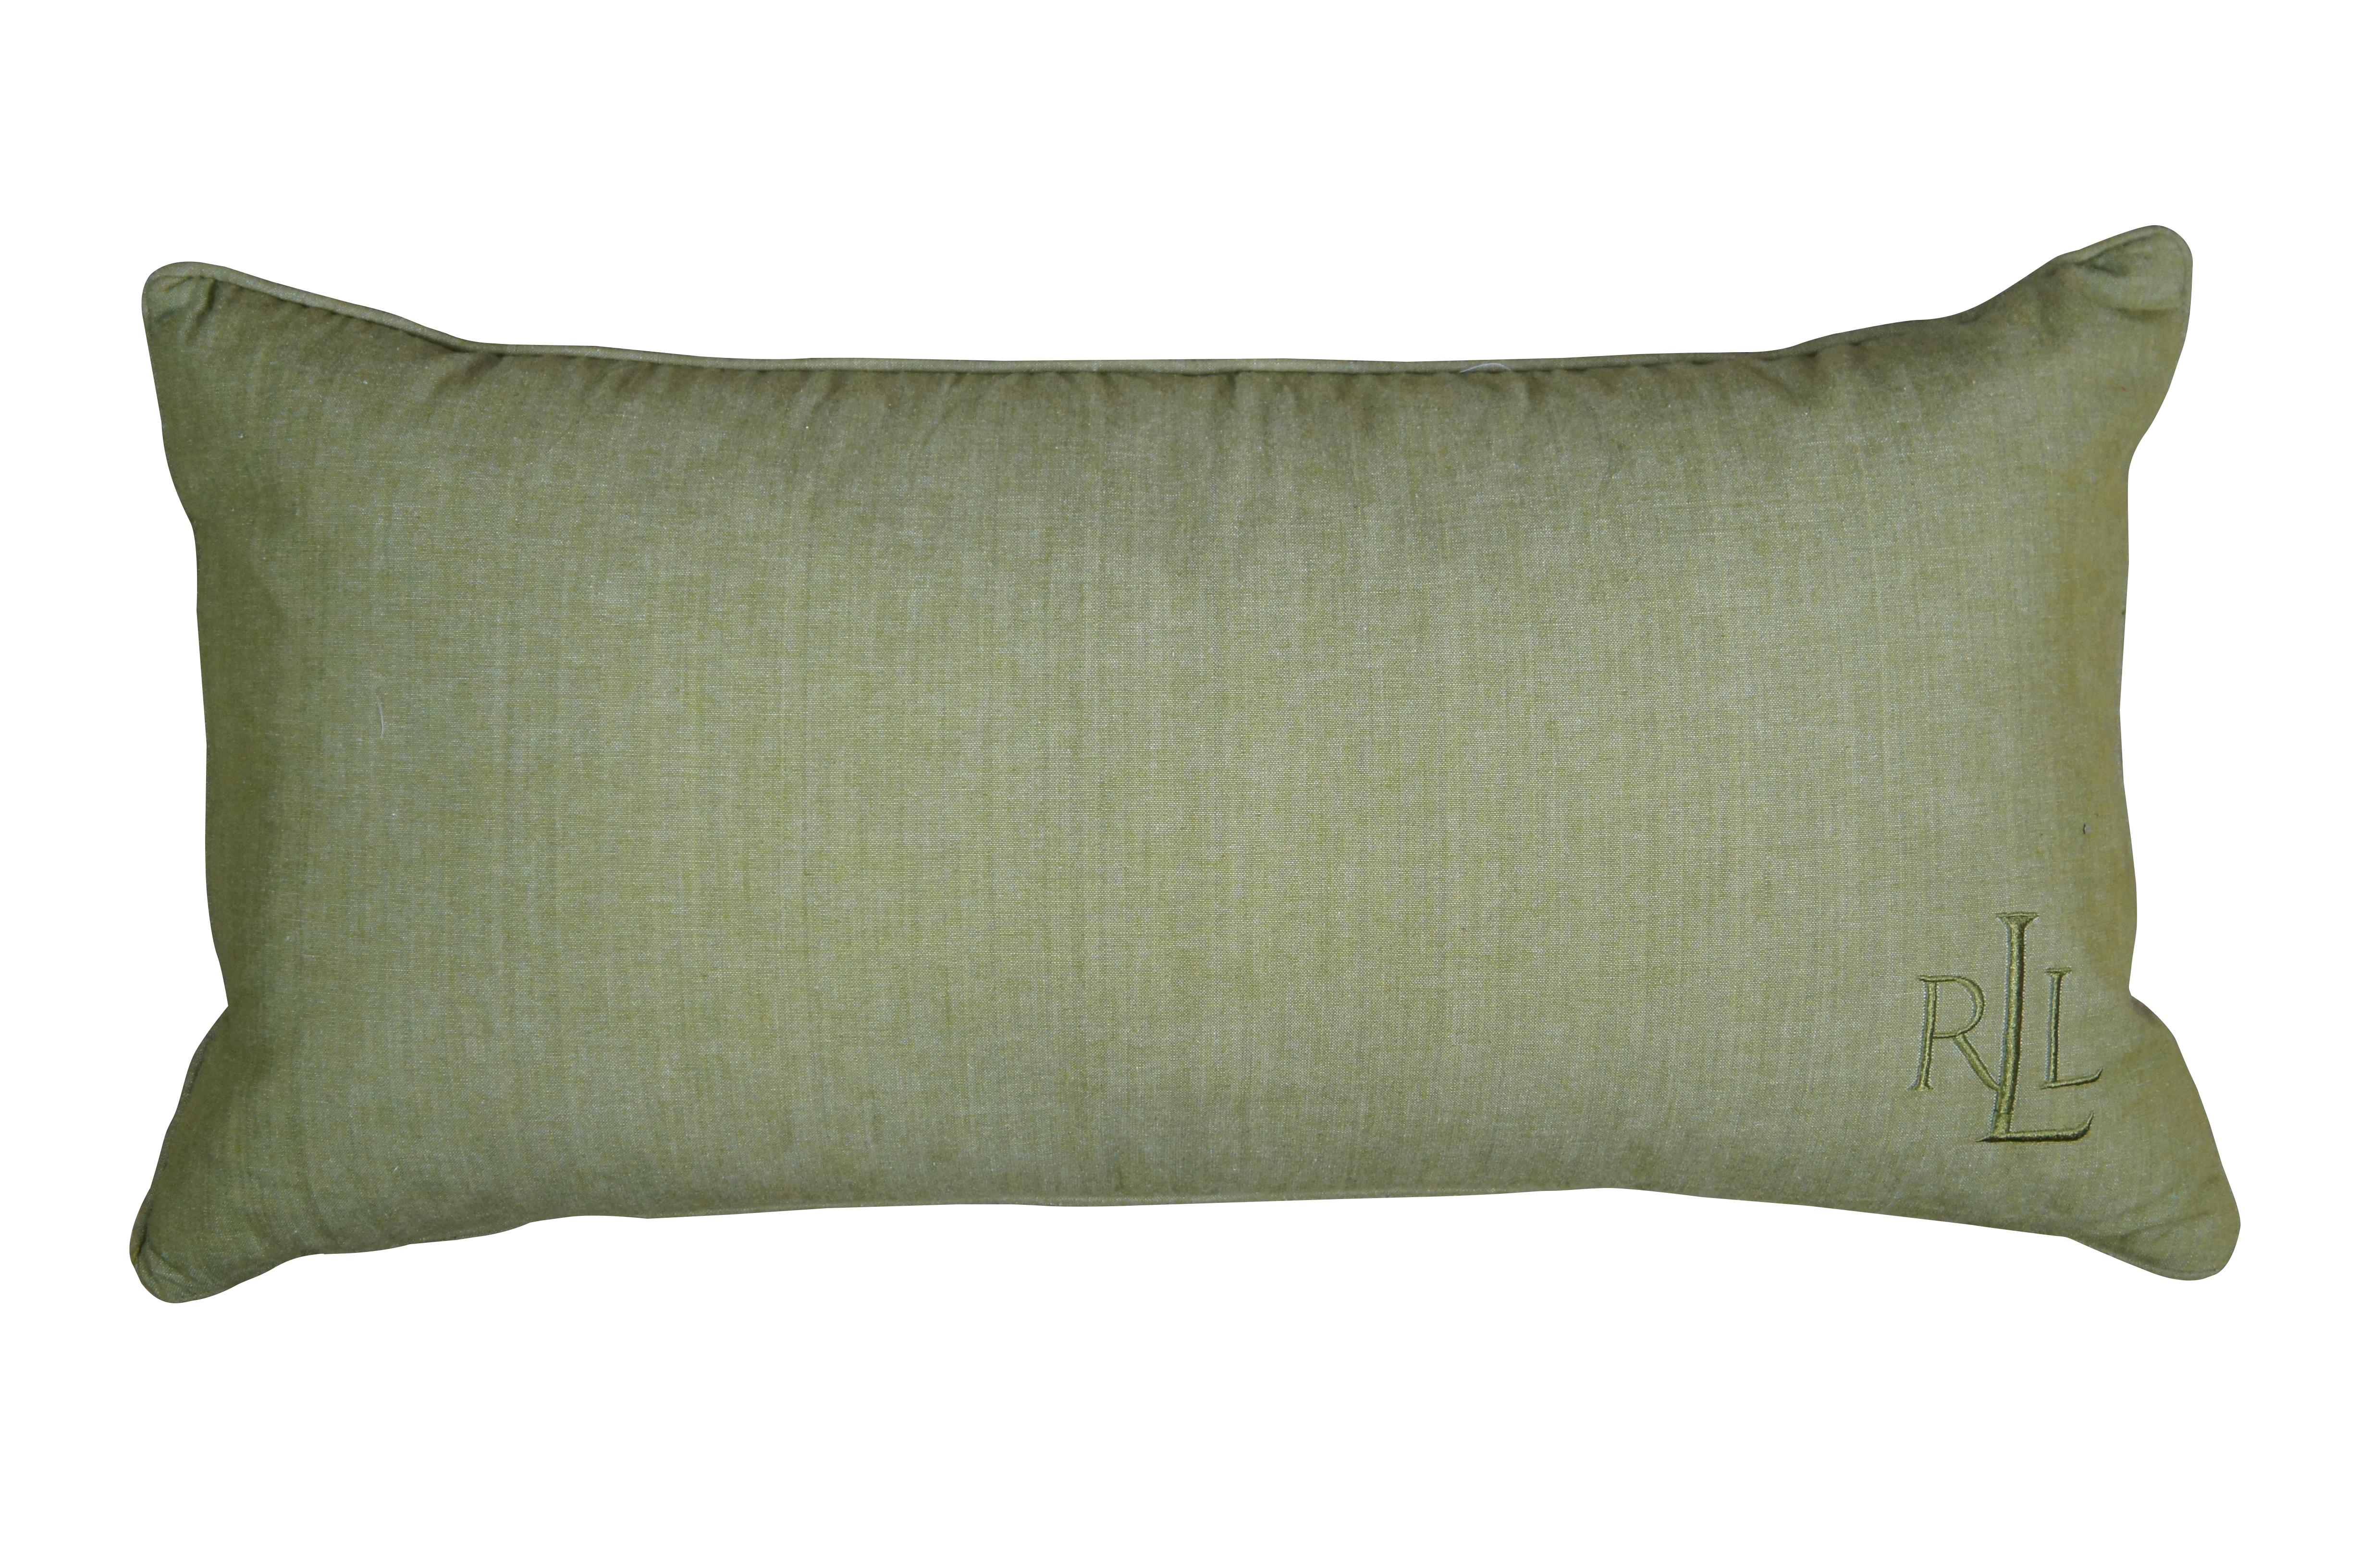 monogrammed lumbar pillows